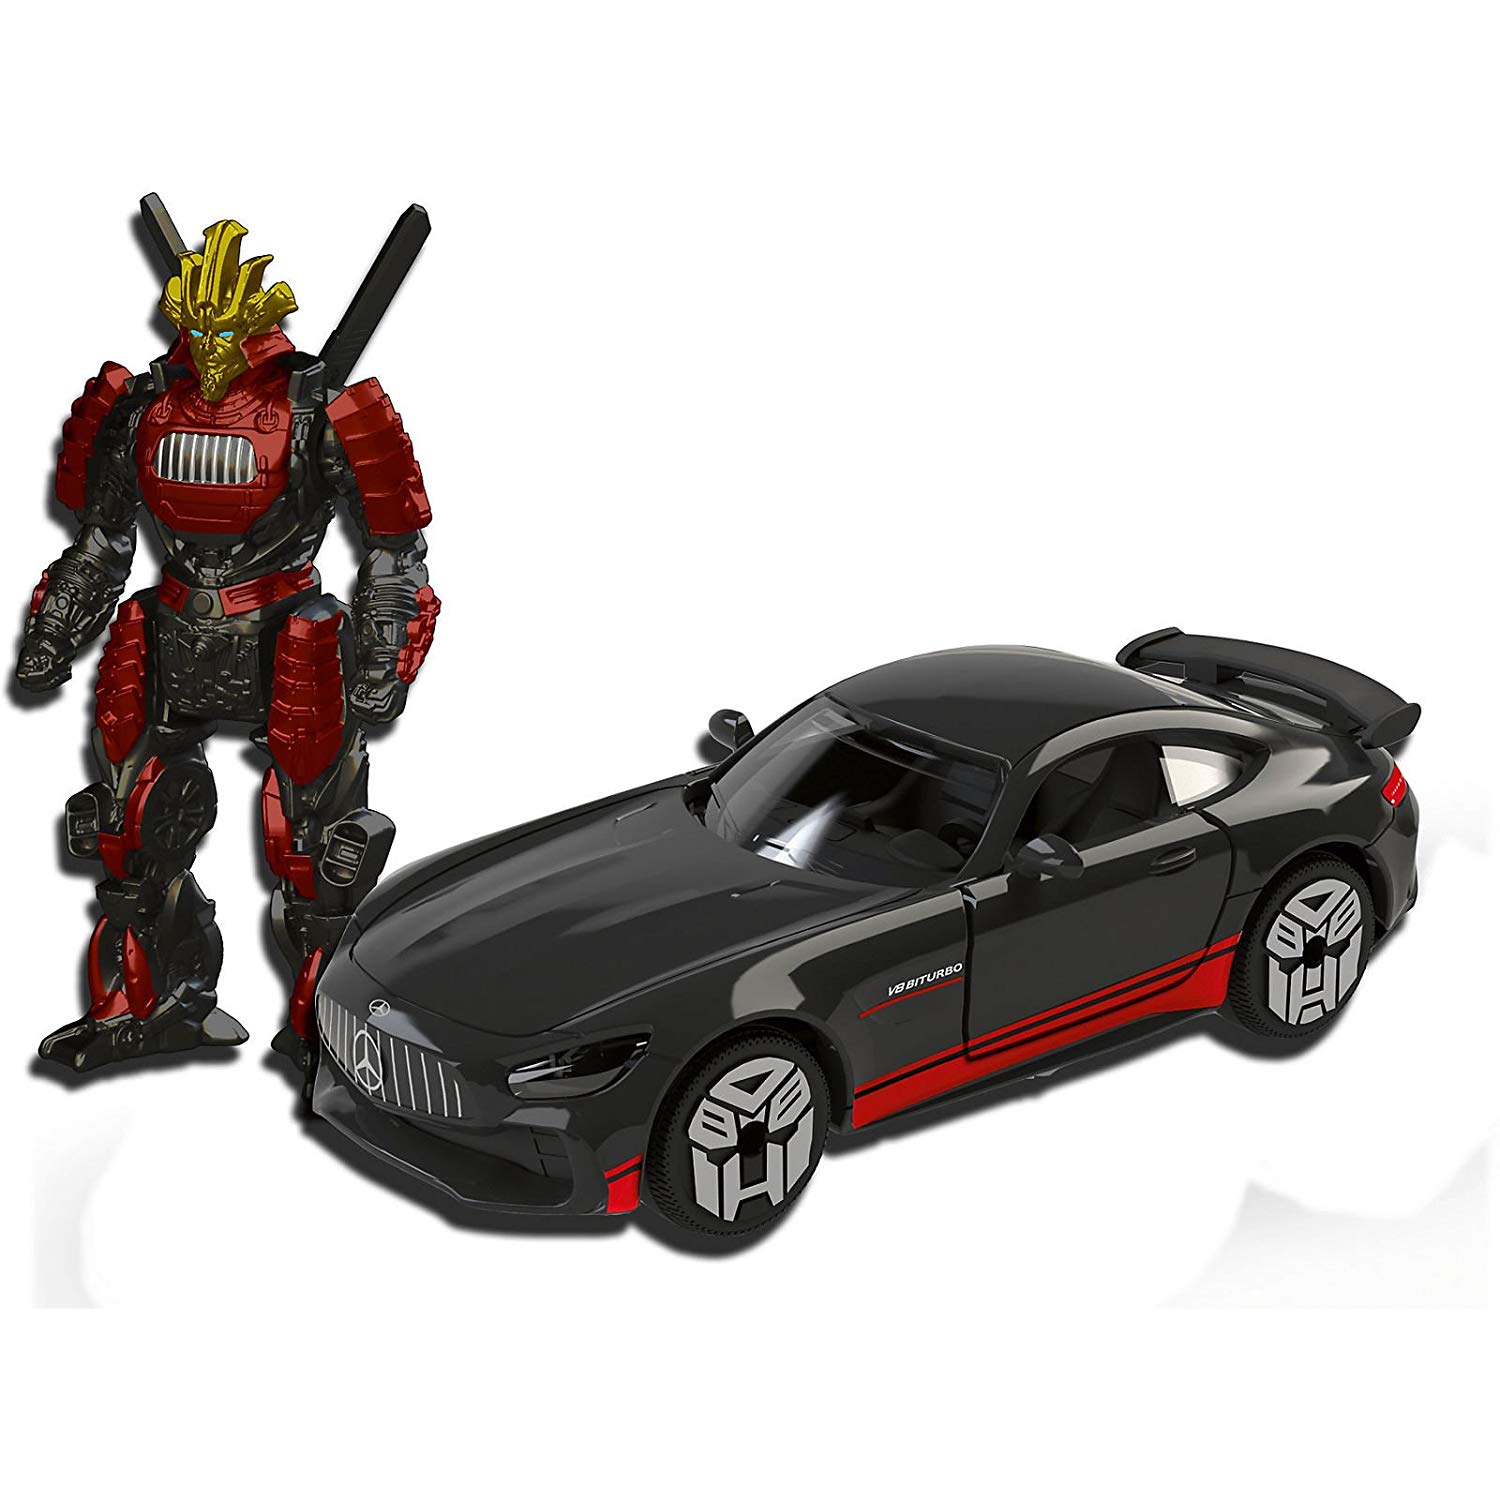 Majorette Dickie Toys 203111016 M5 Transformers Autobot Drift Miniature Vehicle Toy C